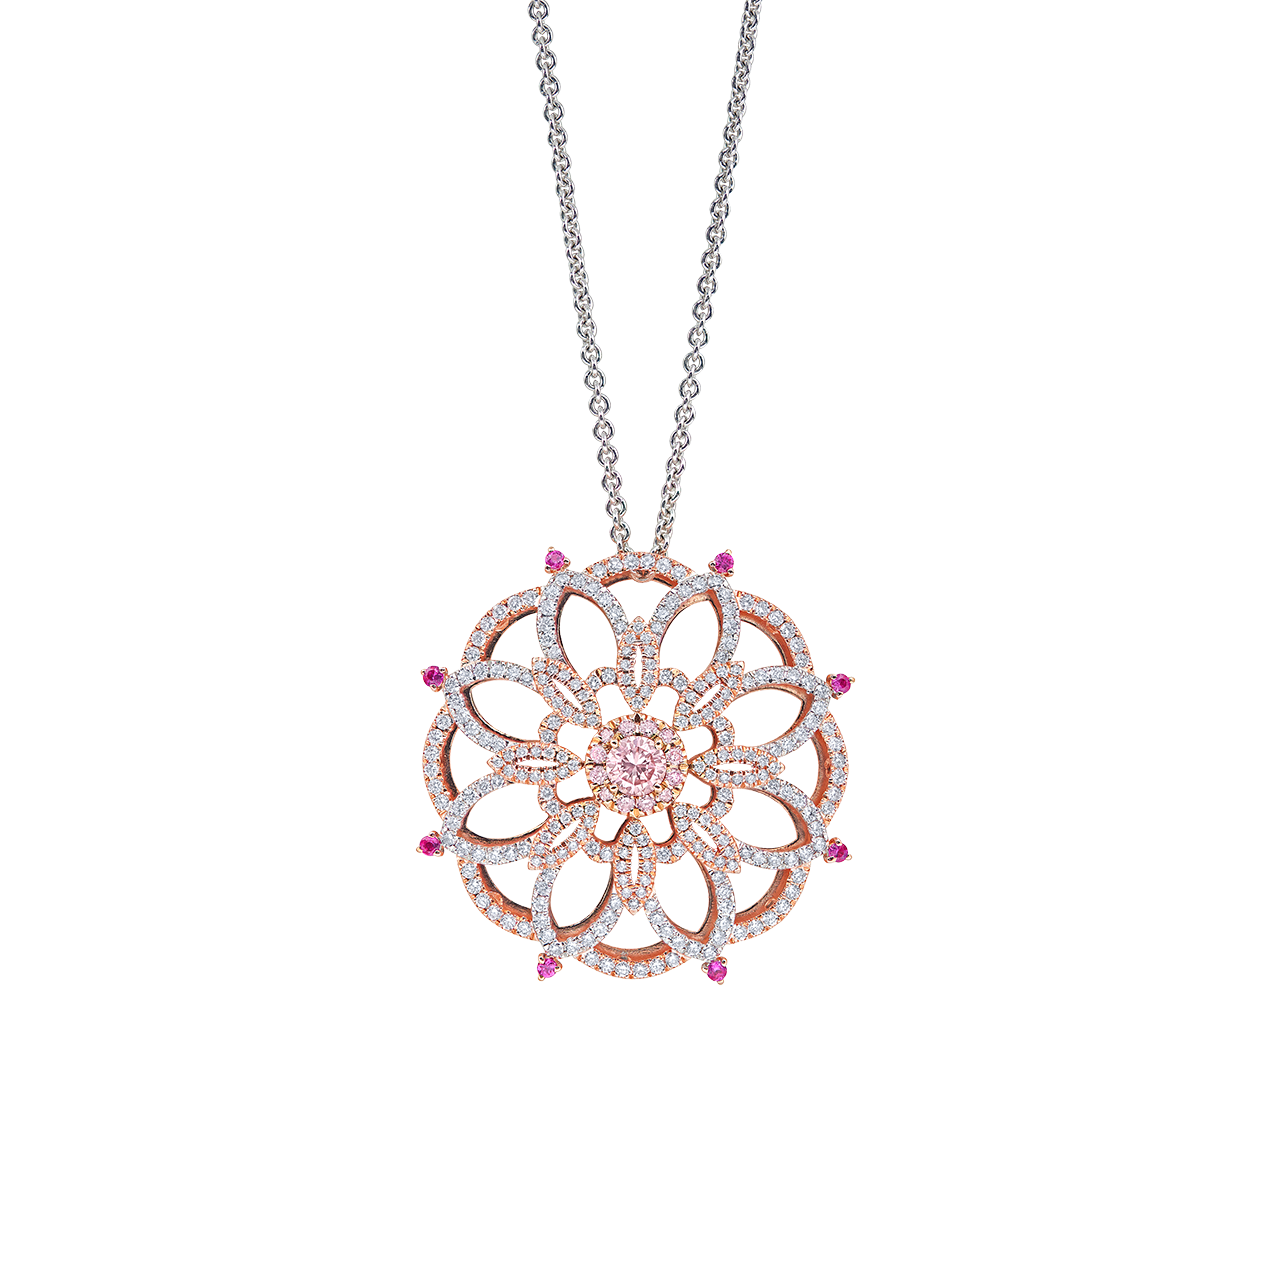 TIME TRAVEL 時光之旅系列
0.43克拉 阿蓋爾粉鑽墜 
Pink Diamond from Argyle Mine 
and Diamond Pendant Necklace